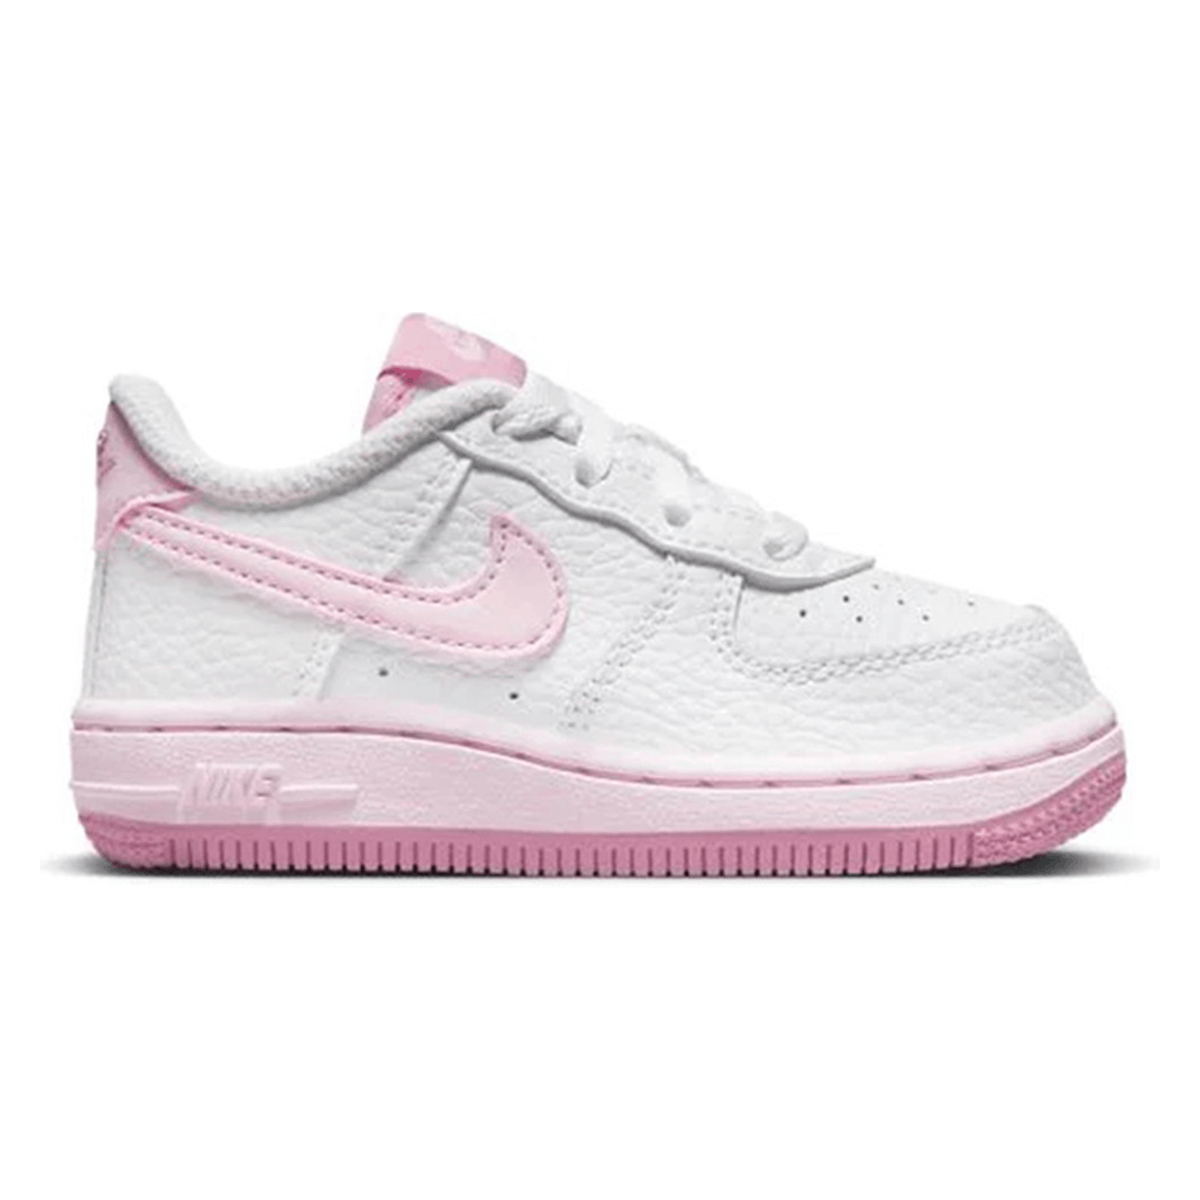 Nike Air Force 1 Low White Pink Foam (TD)